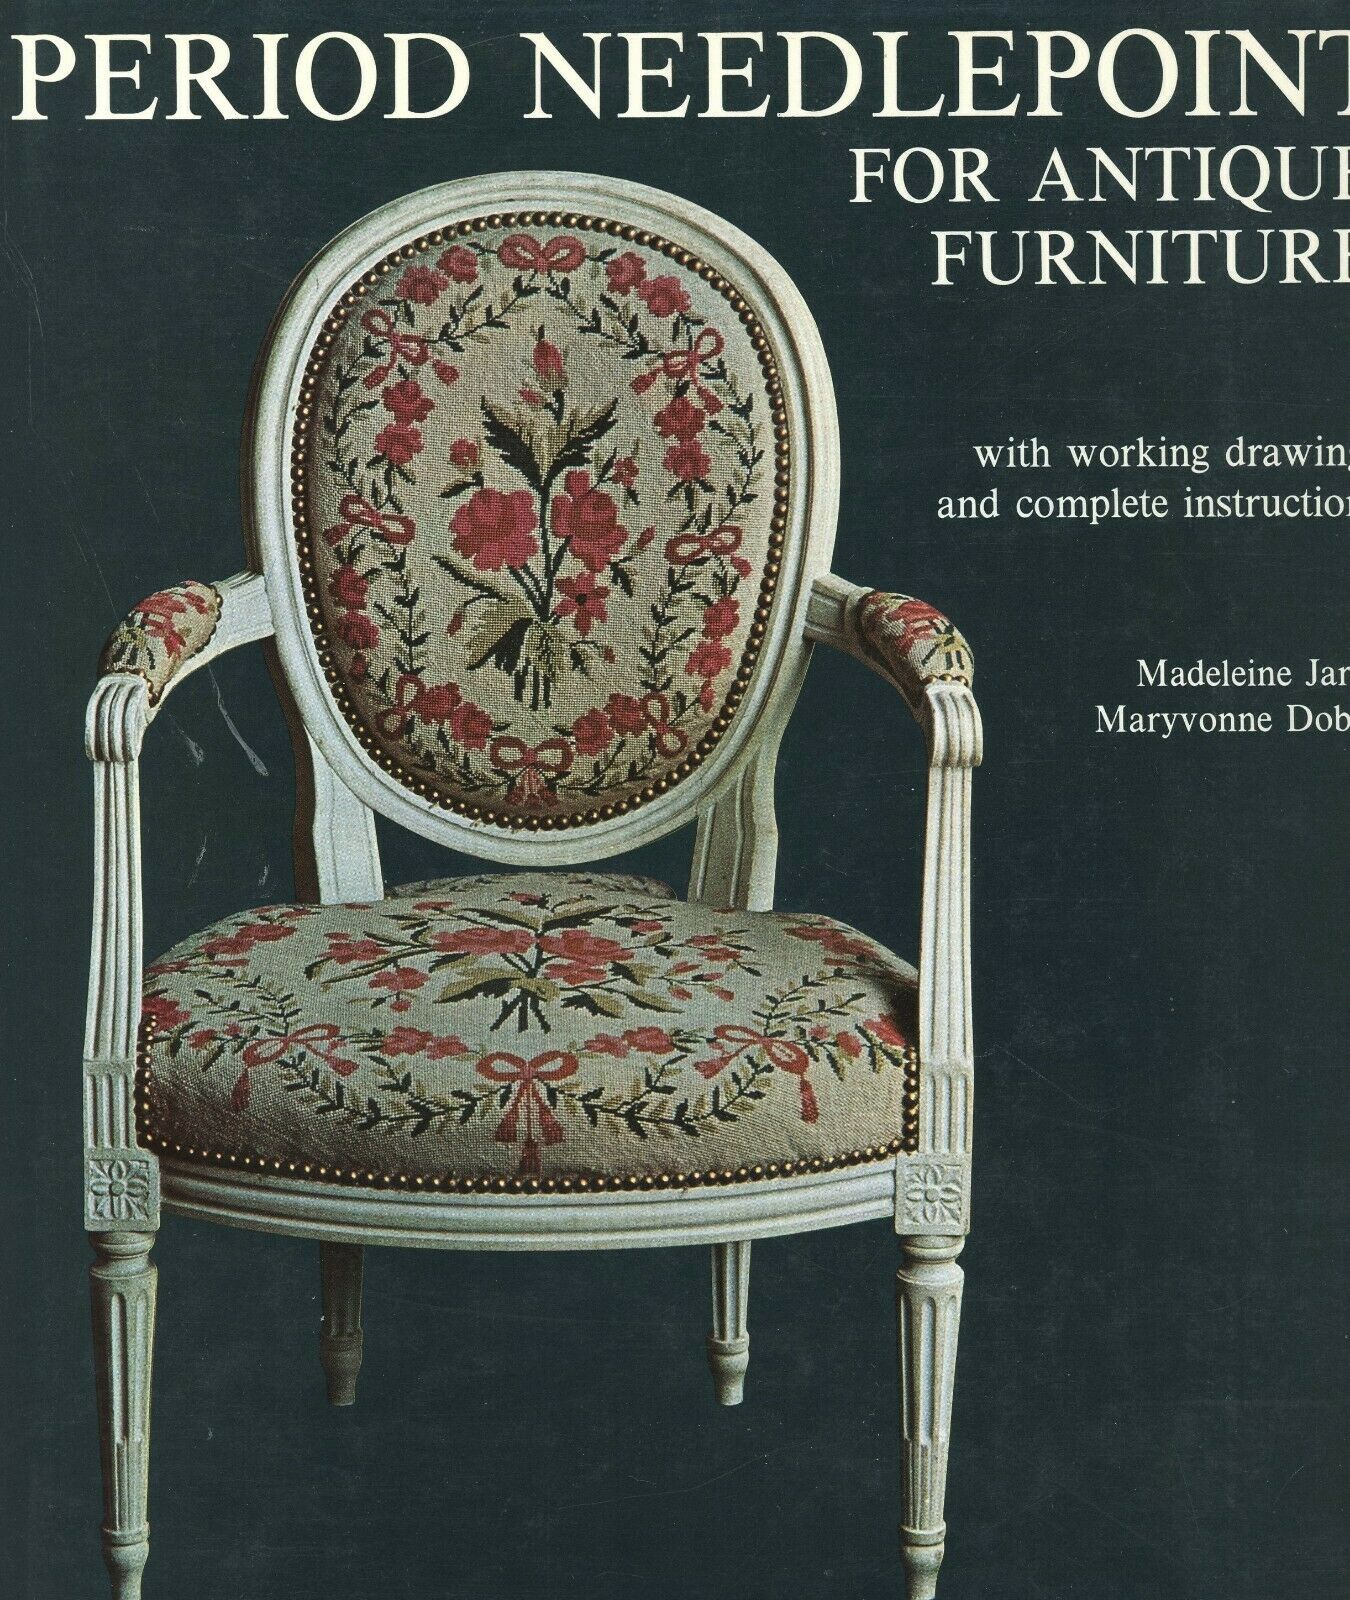 Antique Furniture Period Needlepoint - Dates Patterns Stiches Etc. / Scarce Book